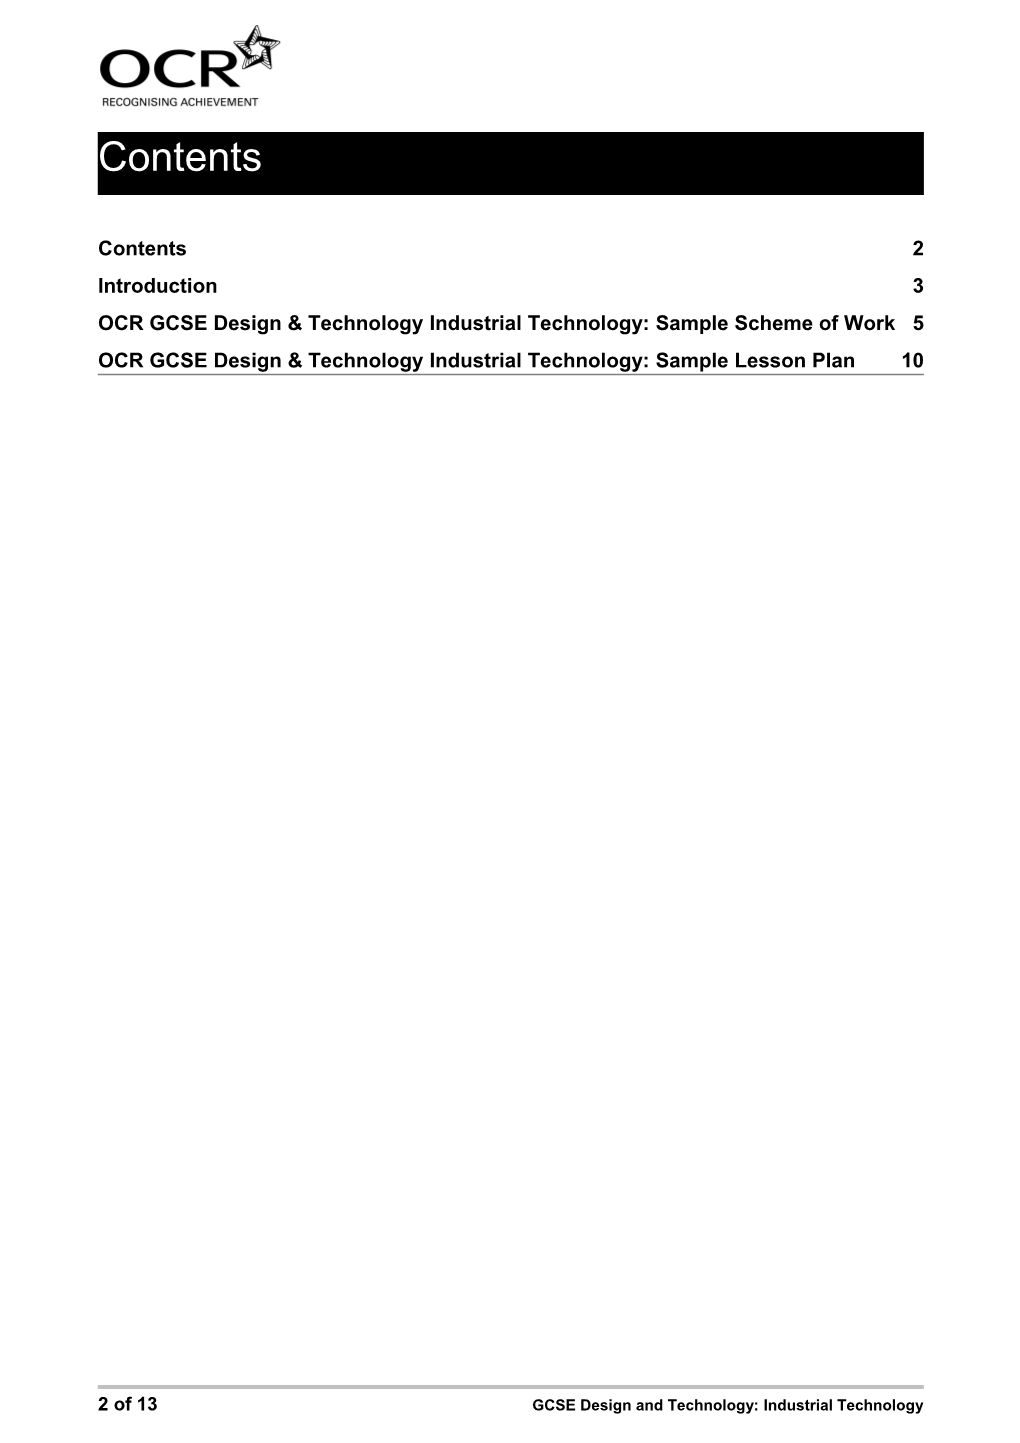 OCR GCSE Design & Technology Industrial Technology: Sample Scheme of Work